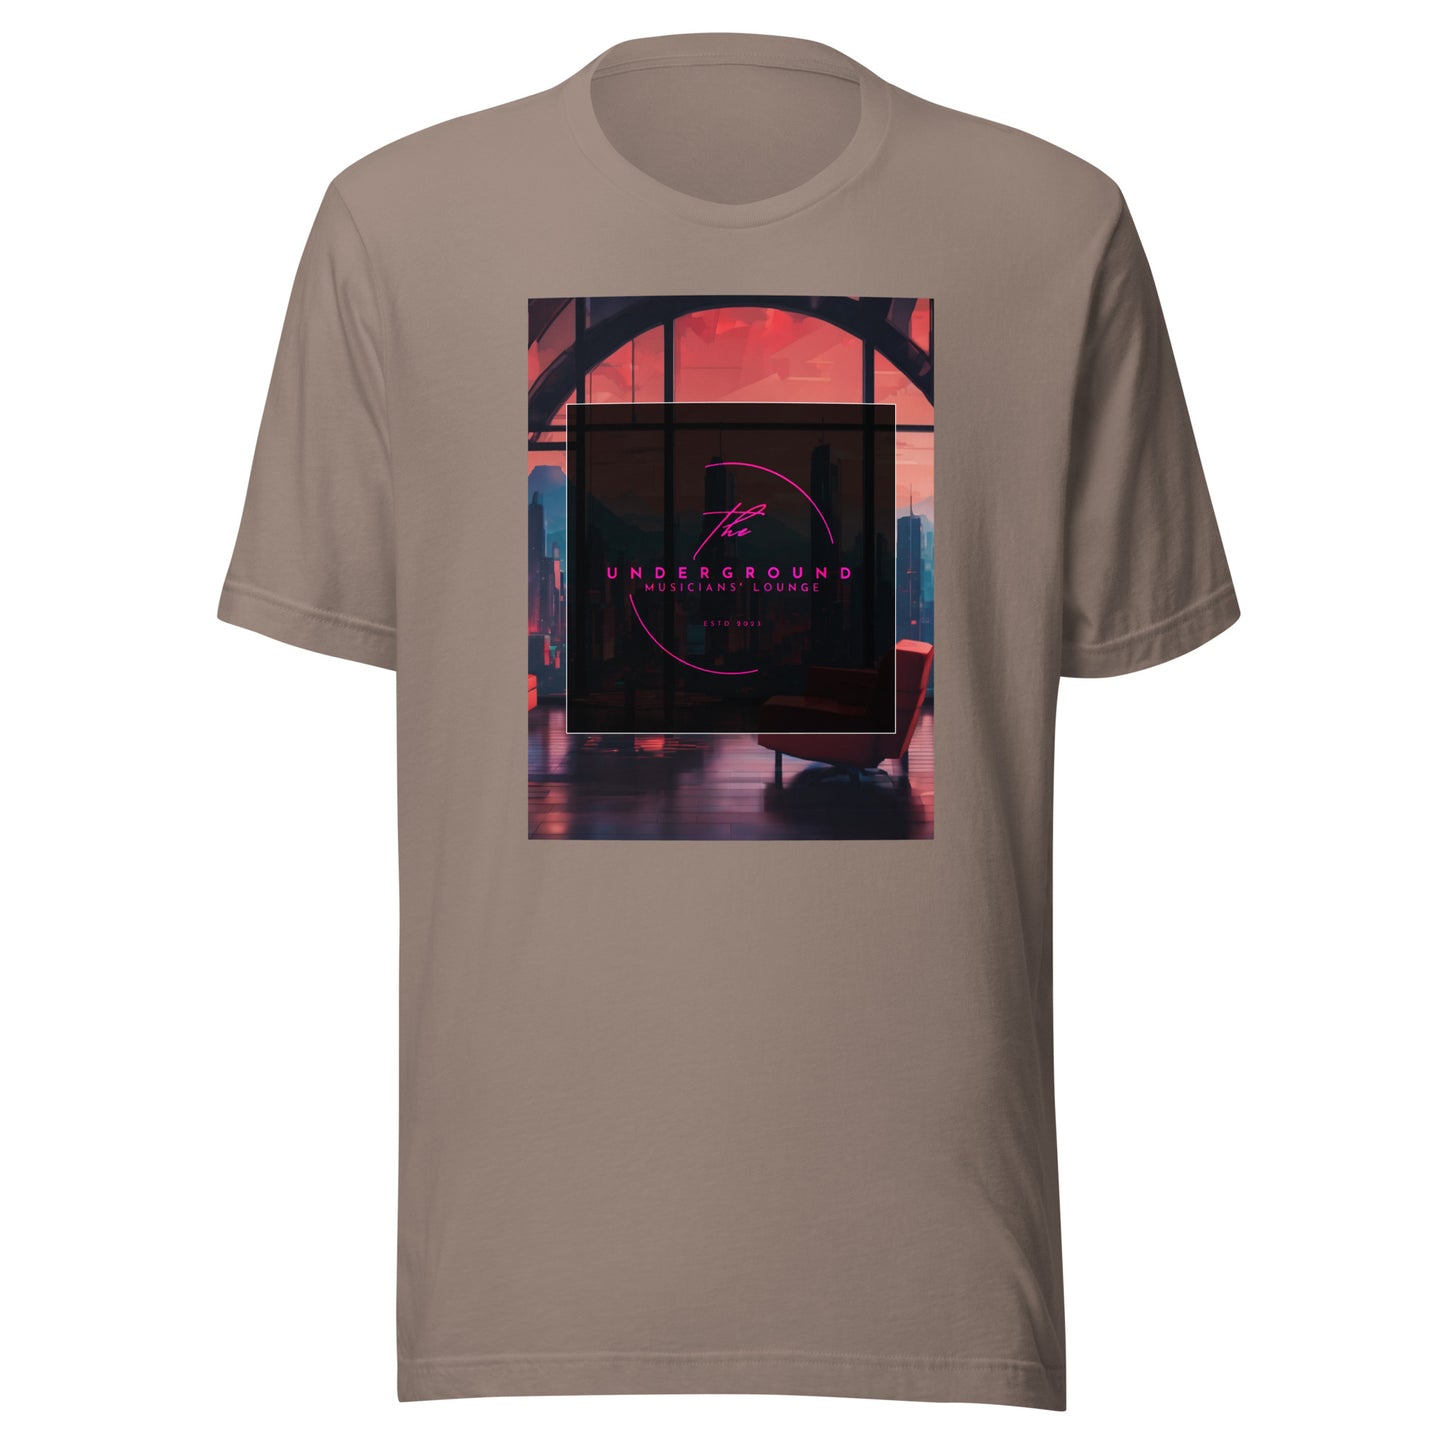 The Underground Musician's Lounge T-Shirt